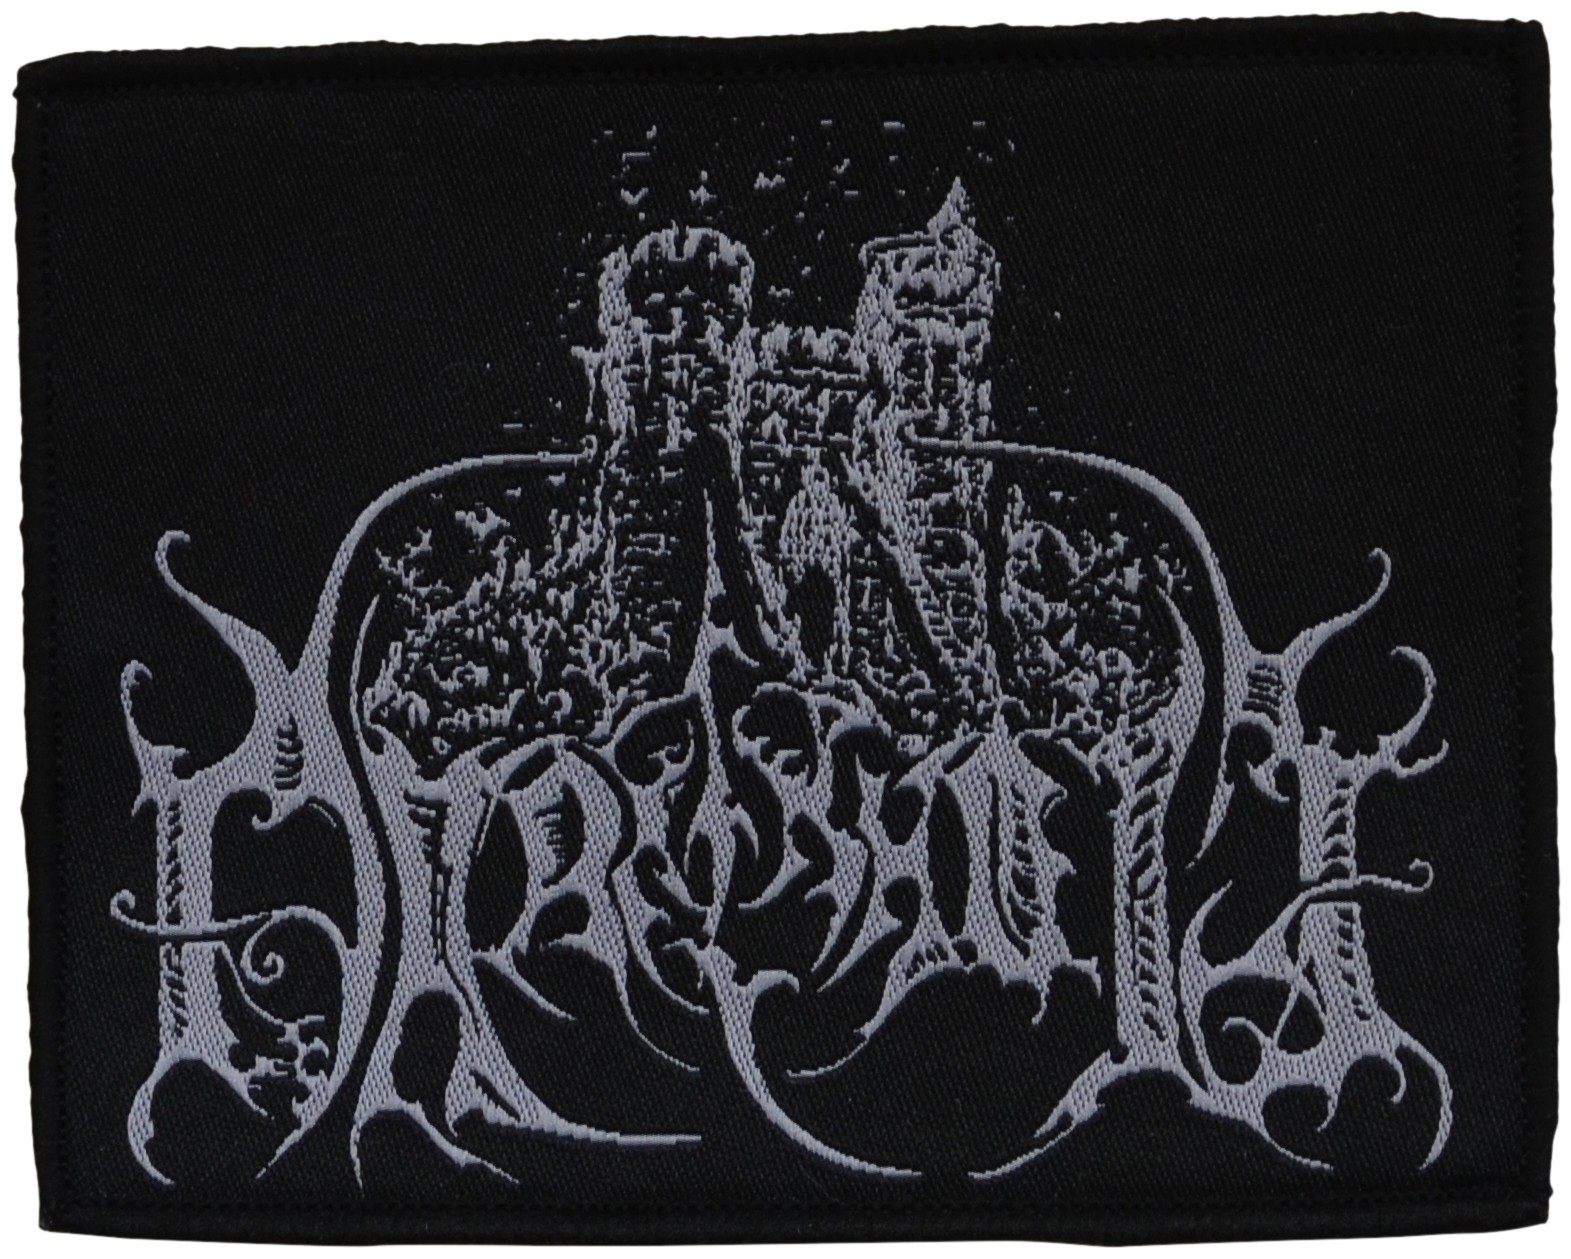 Darkenhold - Logo